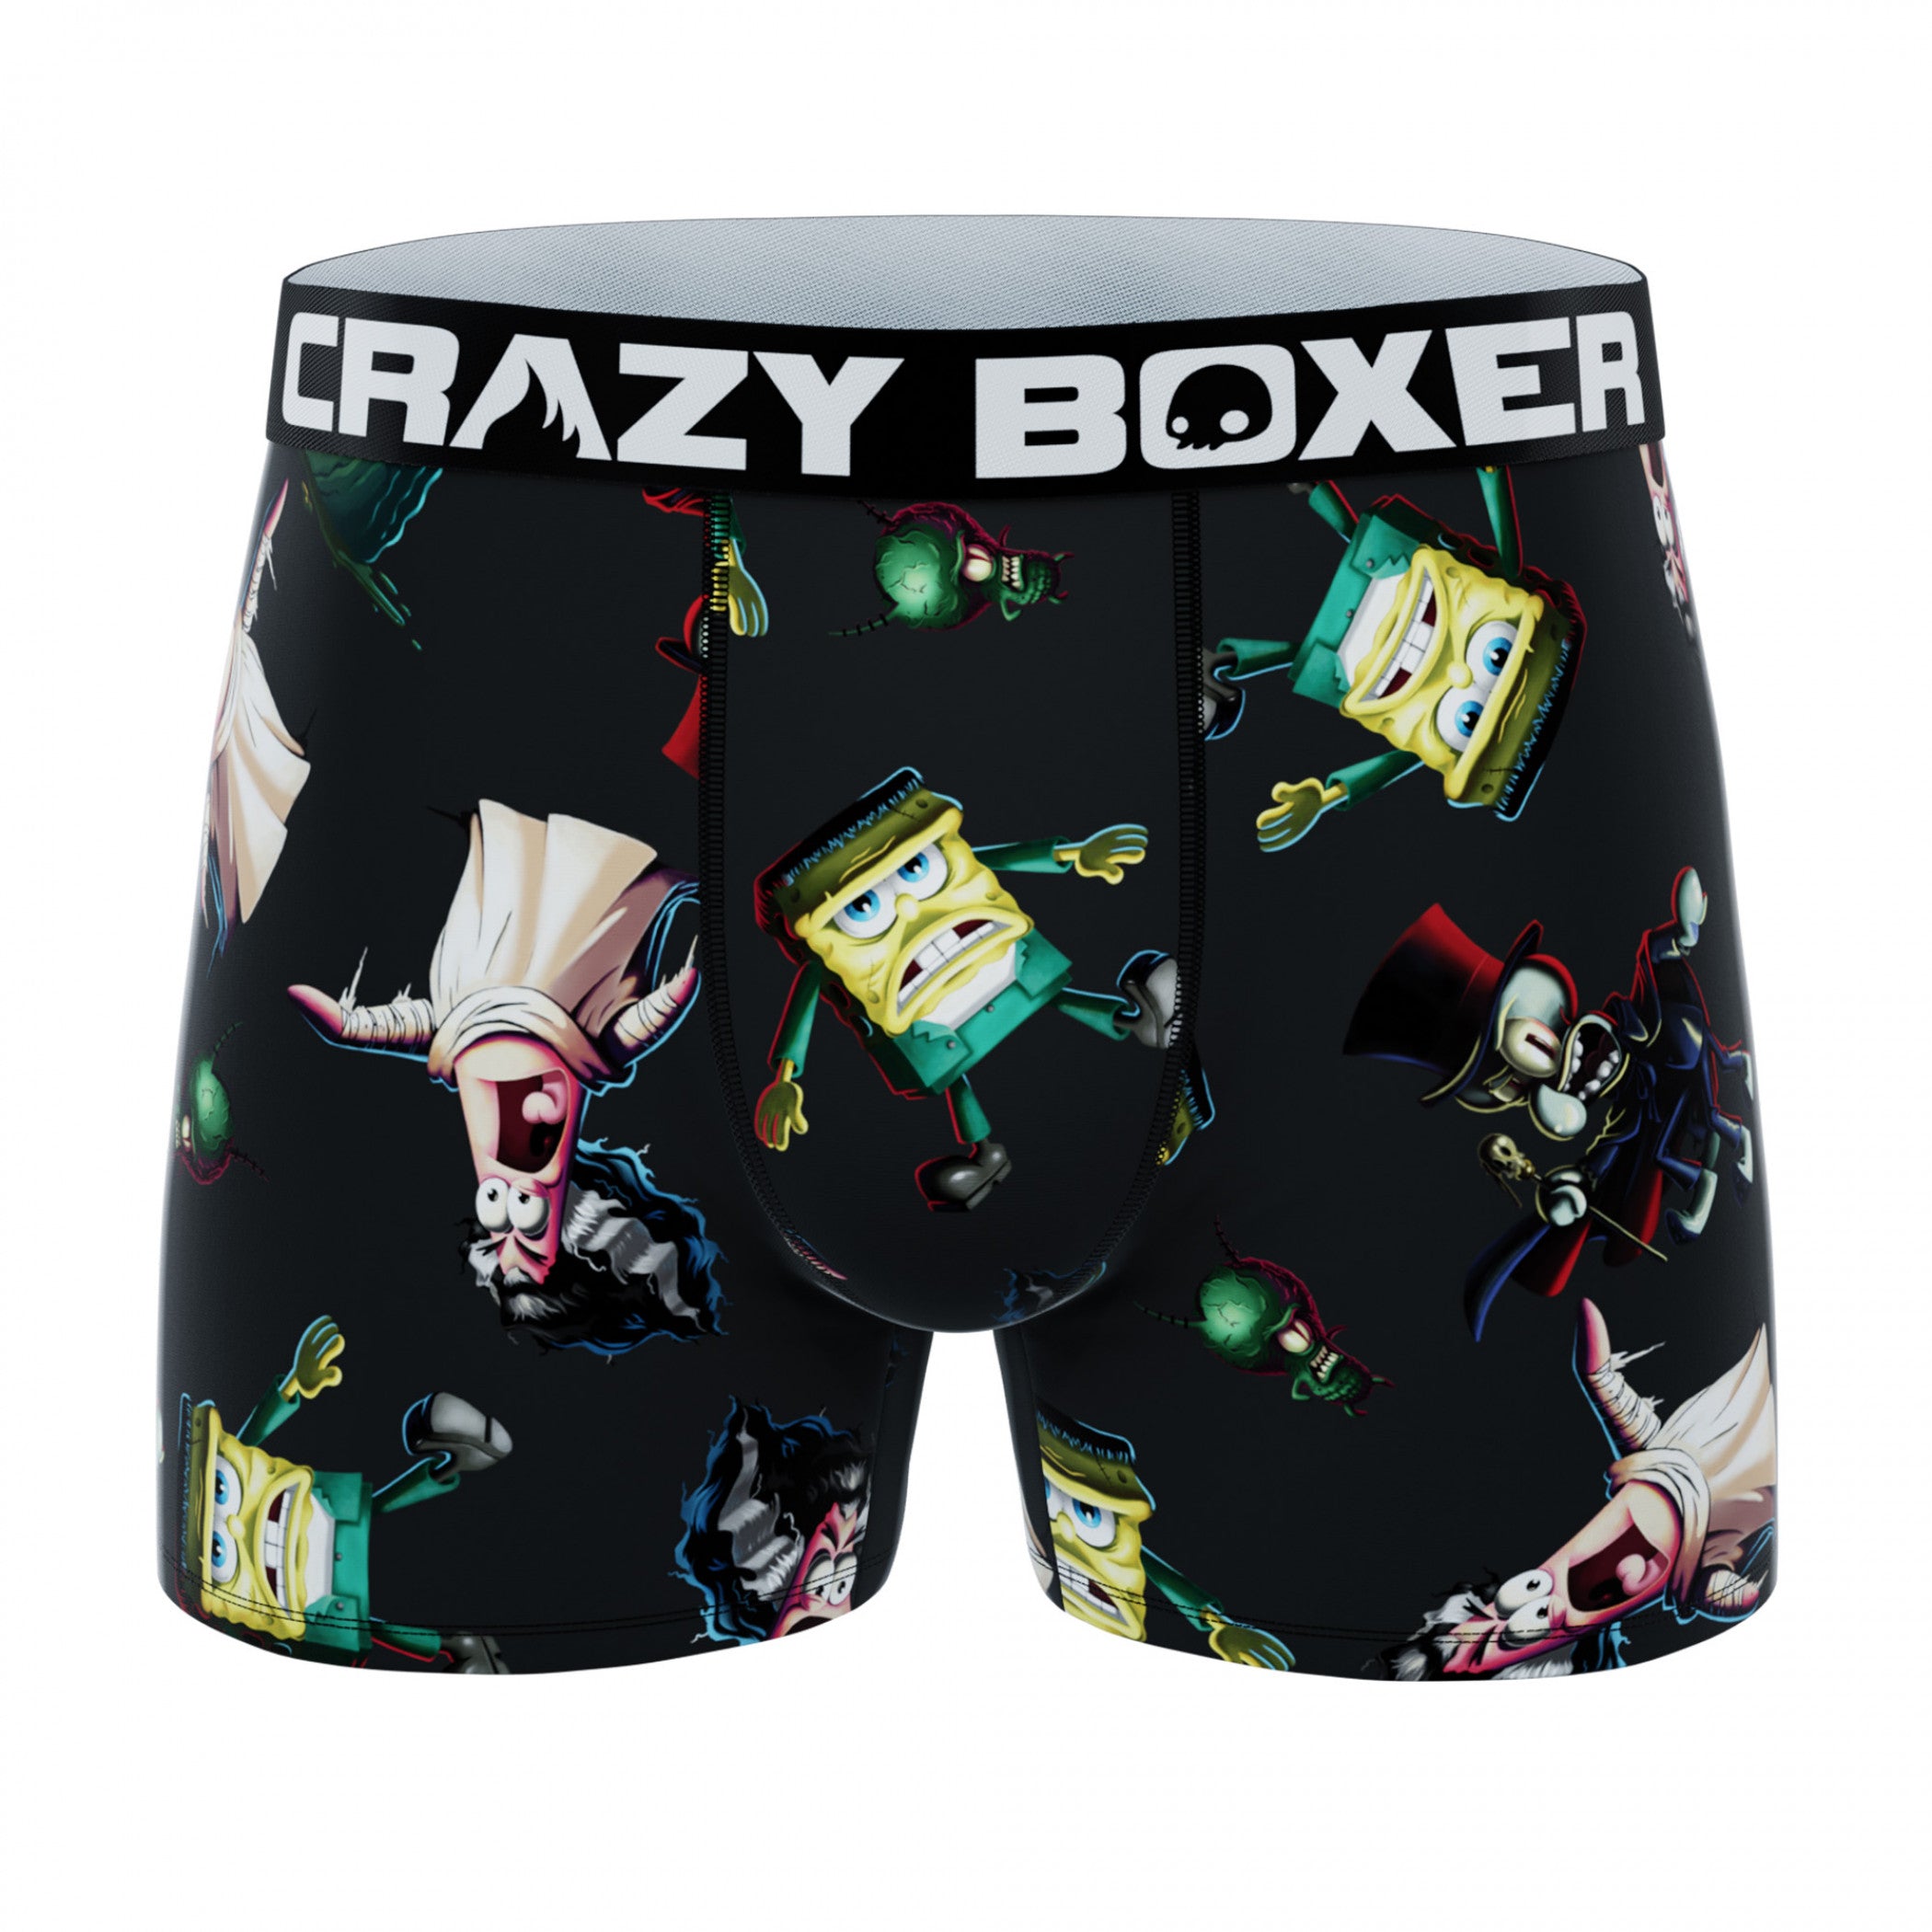 title:Crazy Boxer SpongeBob SquarePants Halloween Boxers in Novelty Packaging;color:Multi-Color